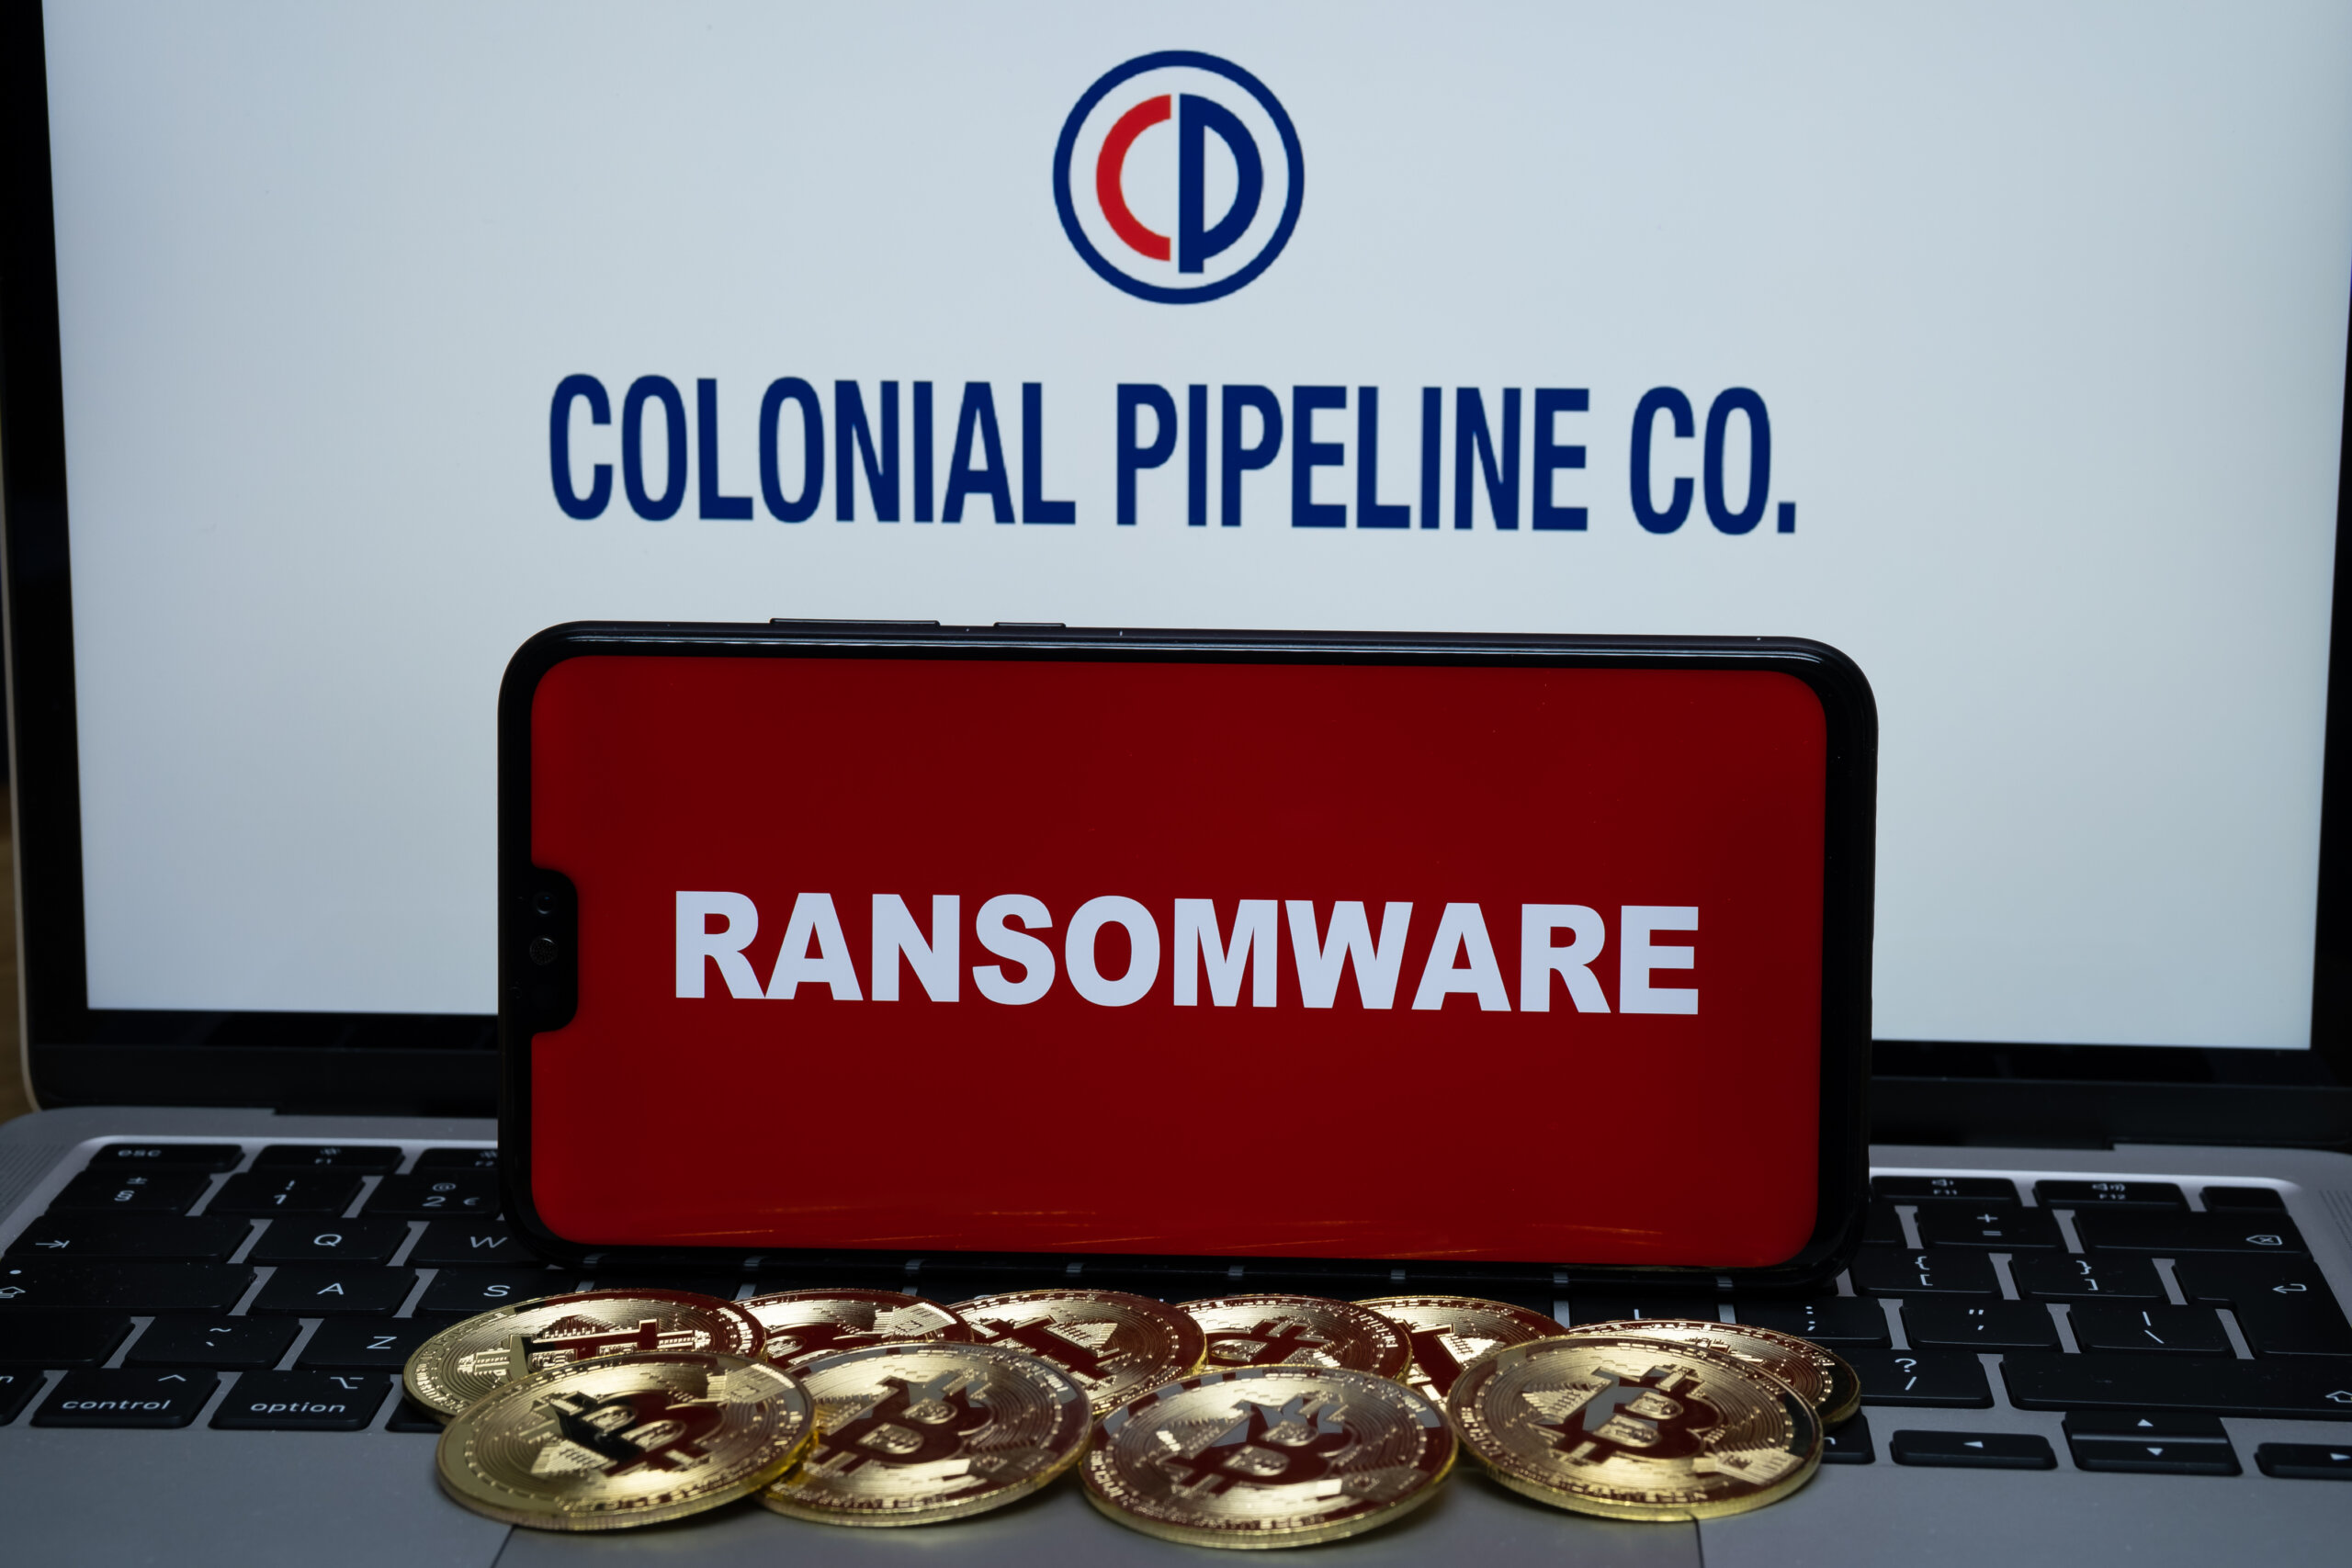 Ransomware attacks hit four renowned companies, sending shockwaves worldwide